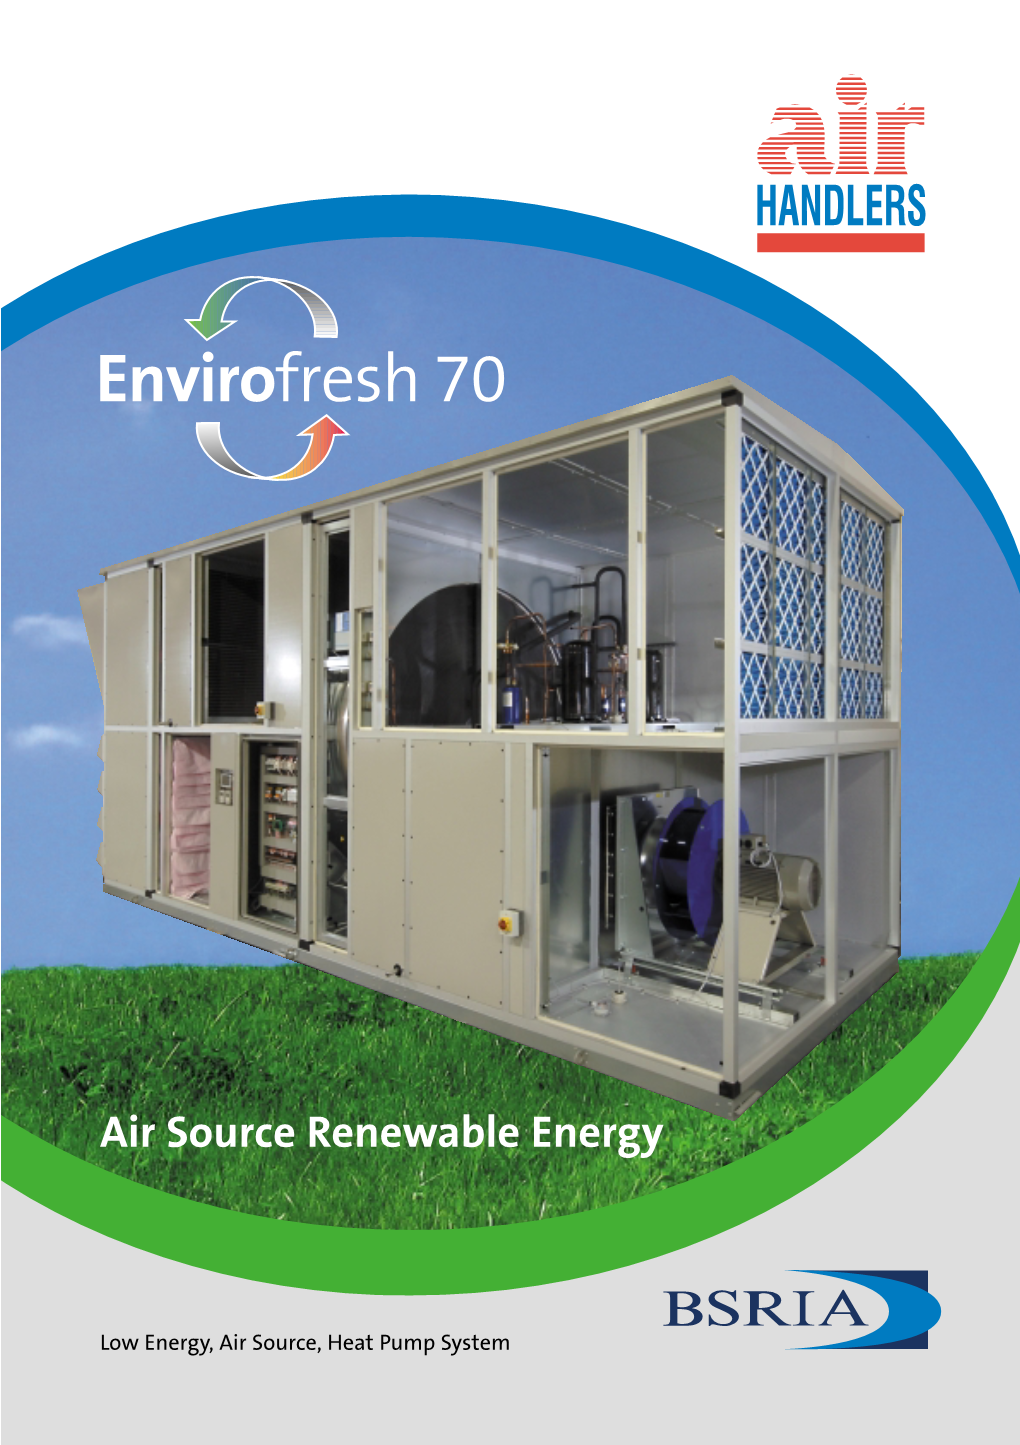 Air Source Renewable Energy